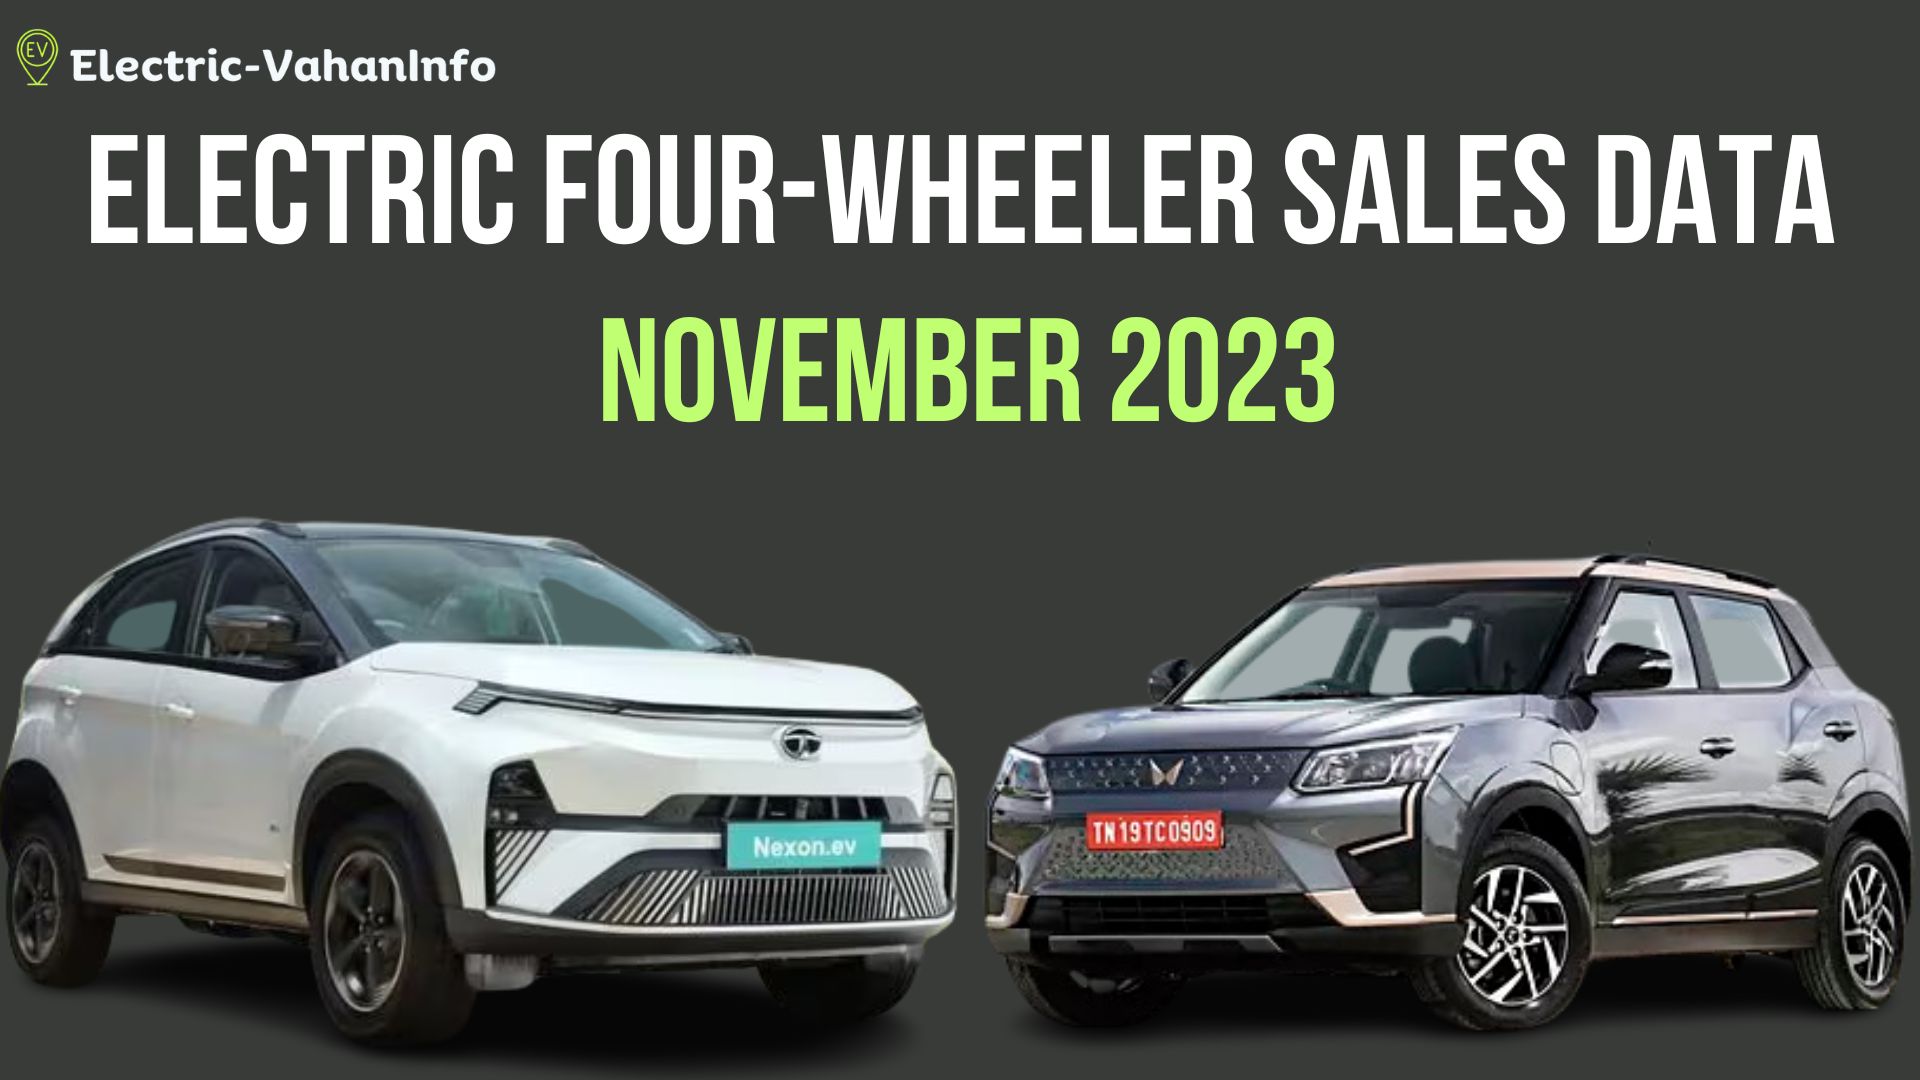 https://electric-vahaninfo.com/electric-four-wheeler-sales-data-november-2023/